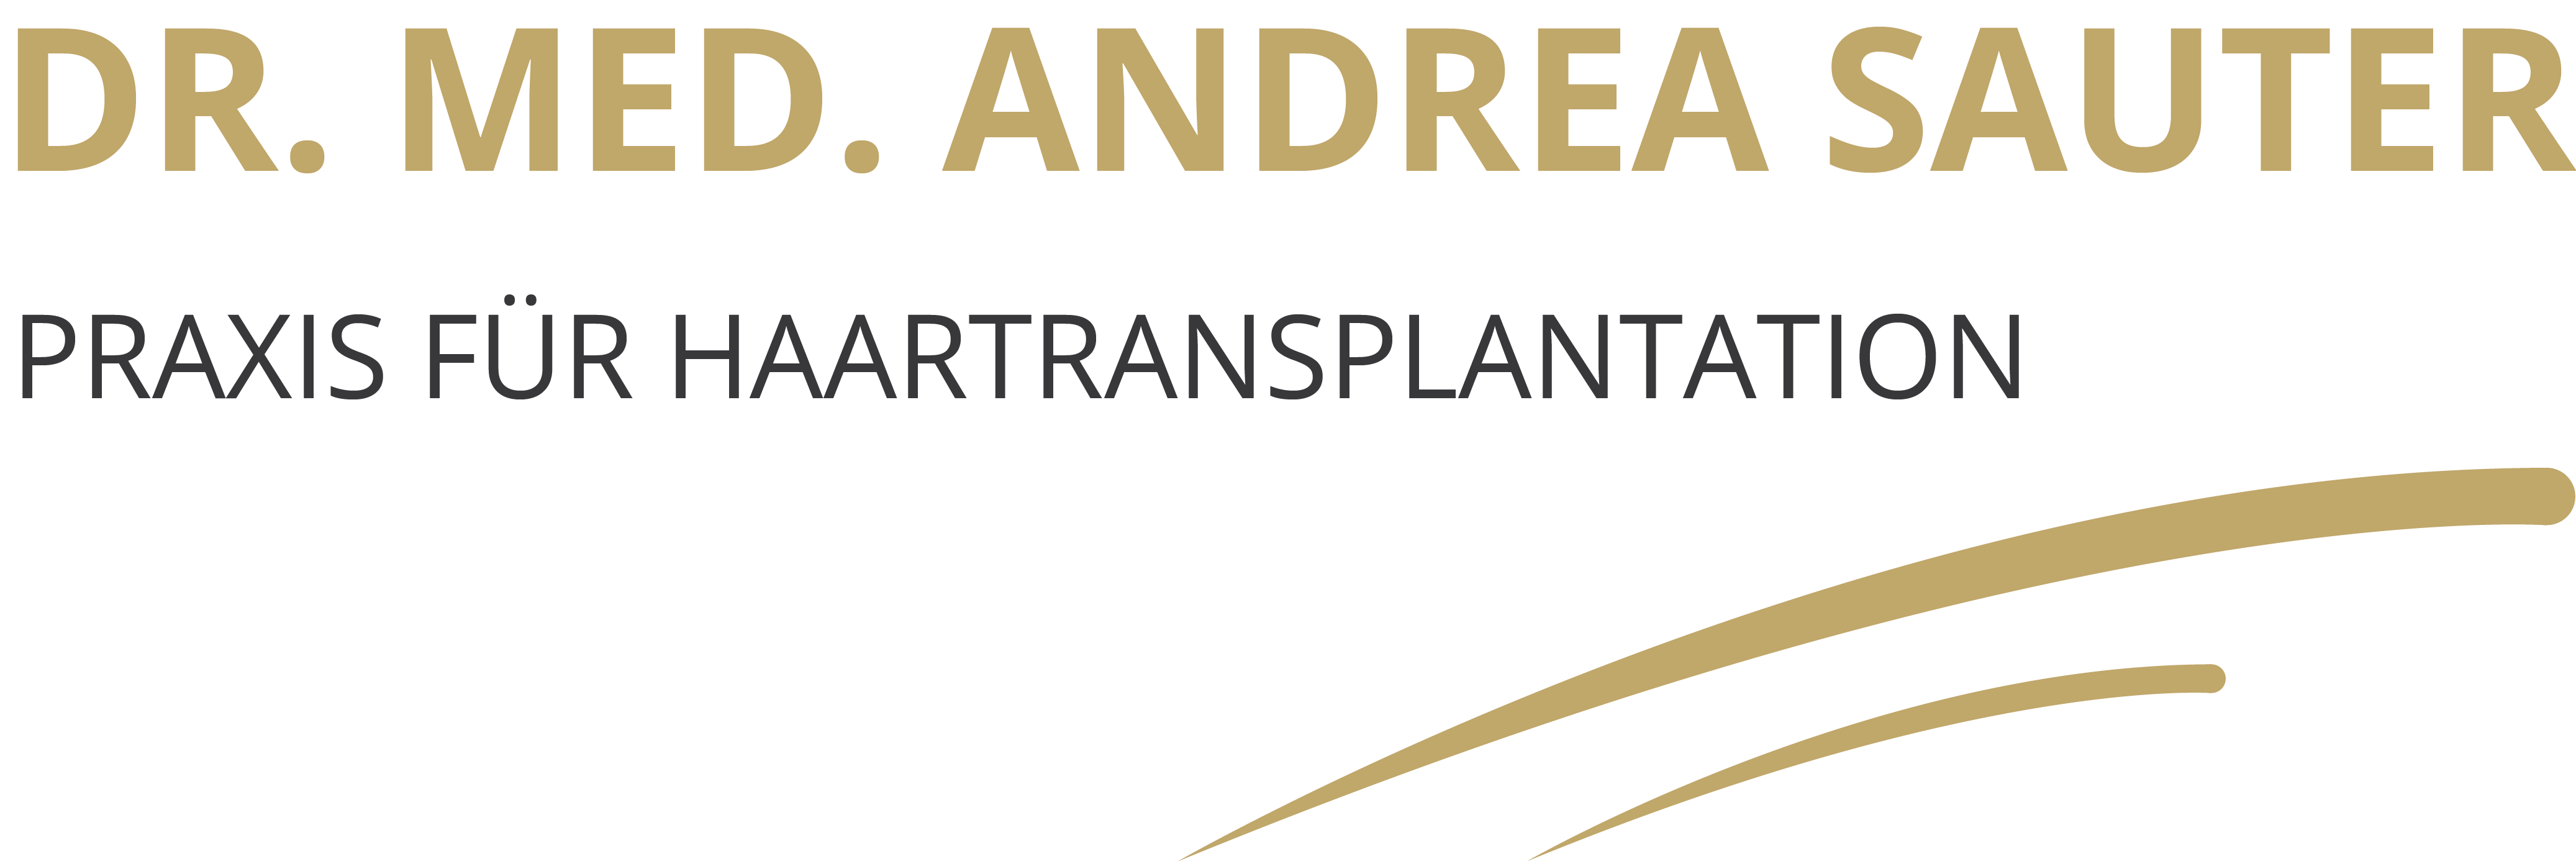 Haartransplantation in der Praxis Dr. med. Andrea Sauter